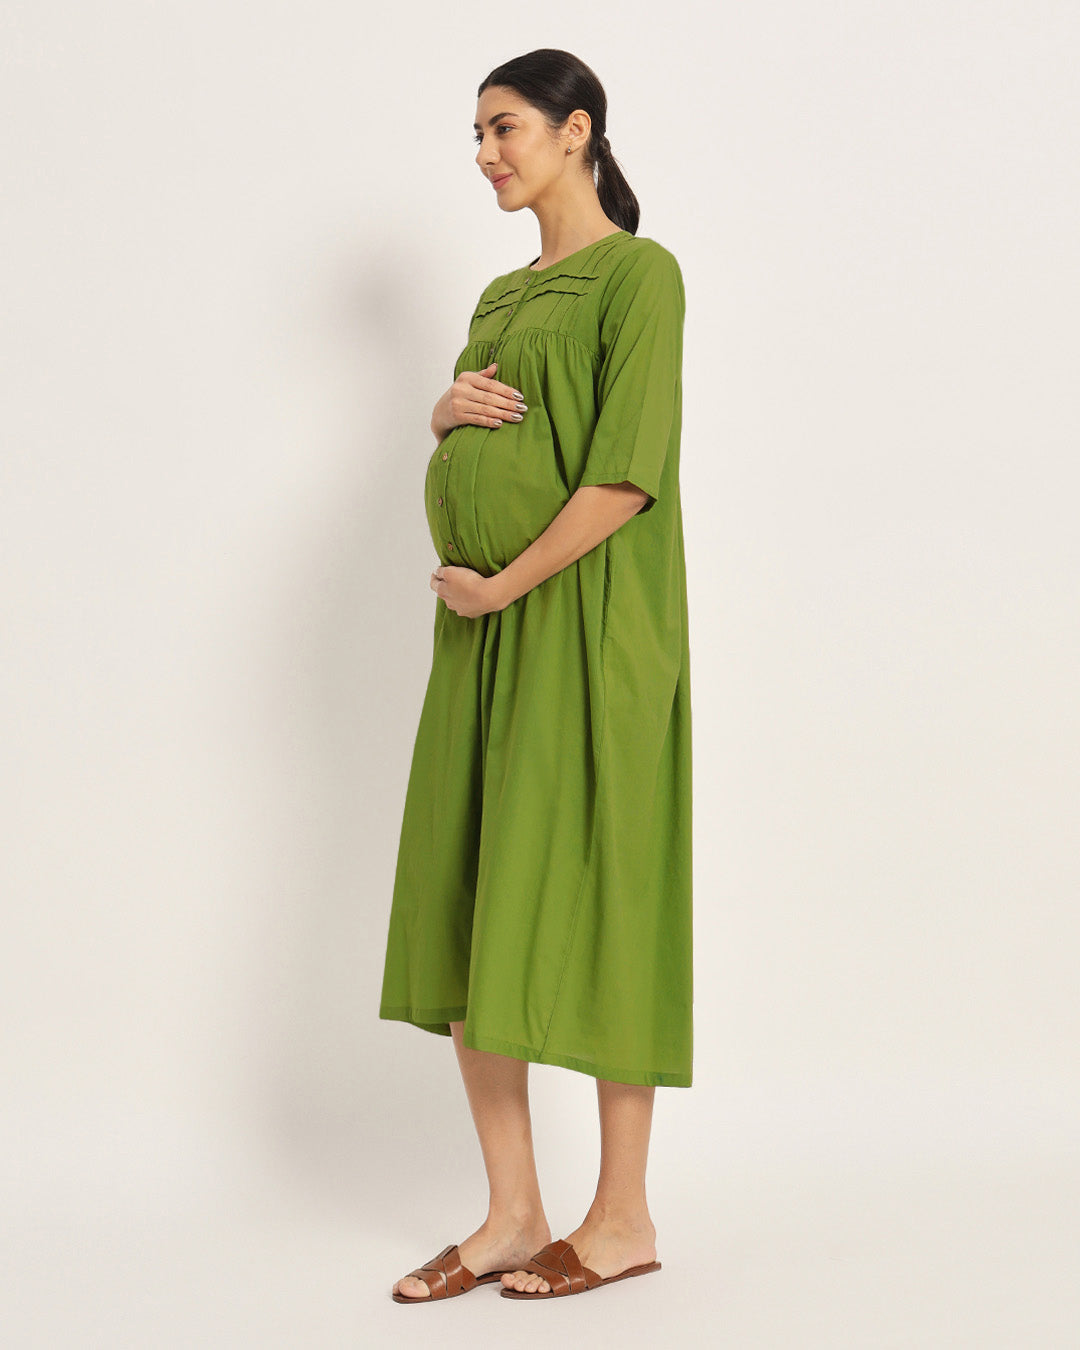 Combo: Iris Pink & Sage Green Mommy-to-Be Marvel Maternity & Nursing Dress